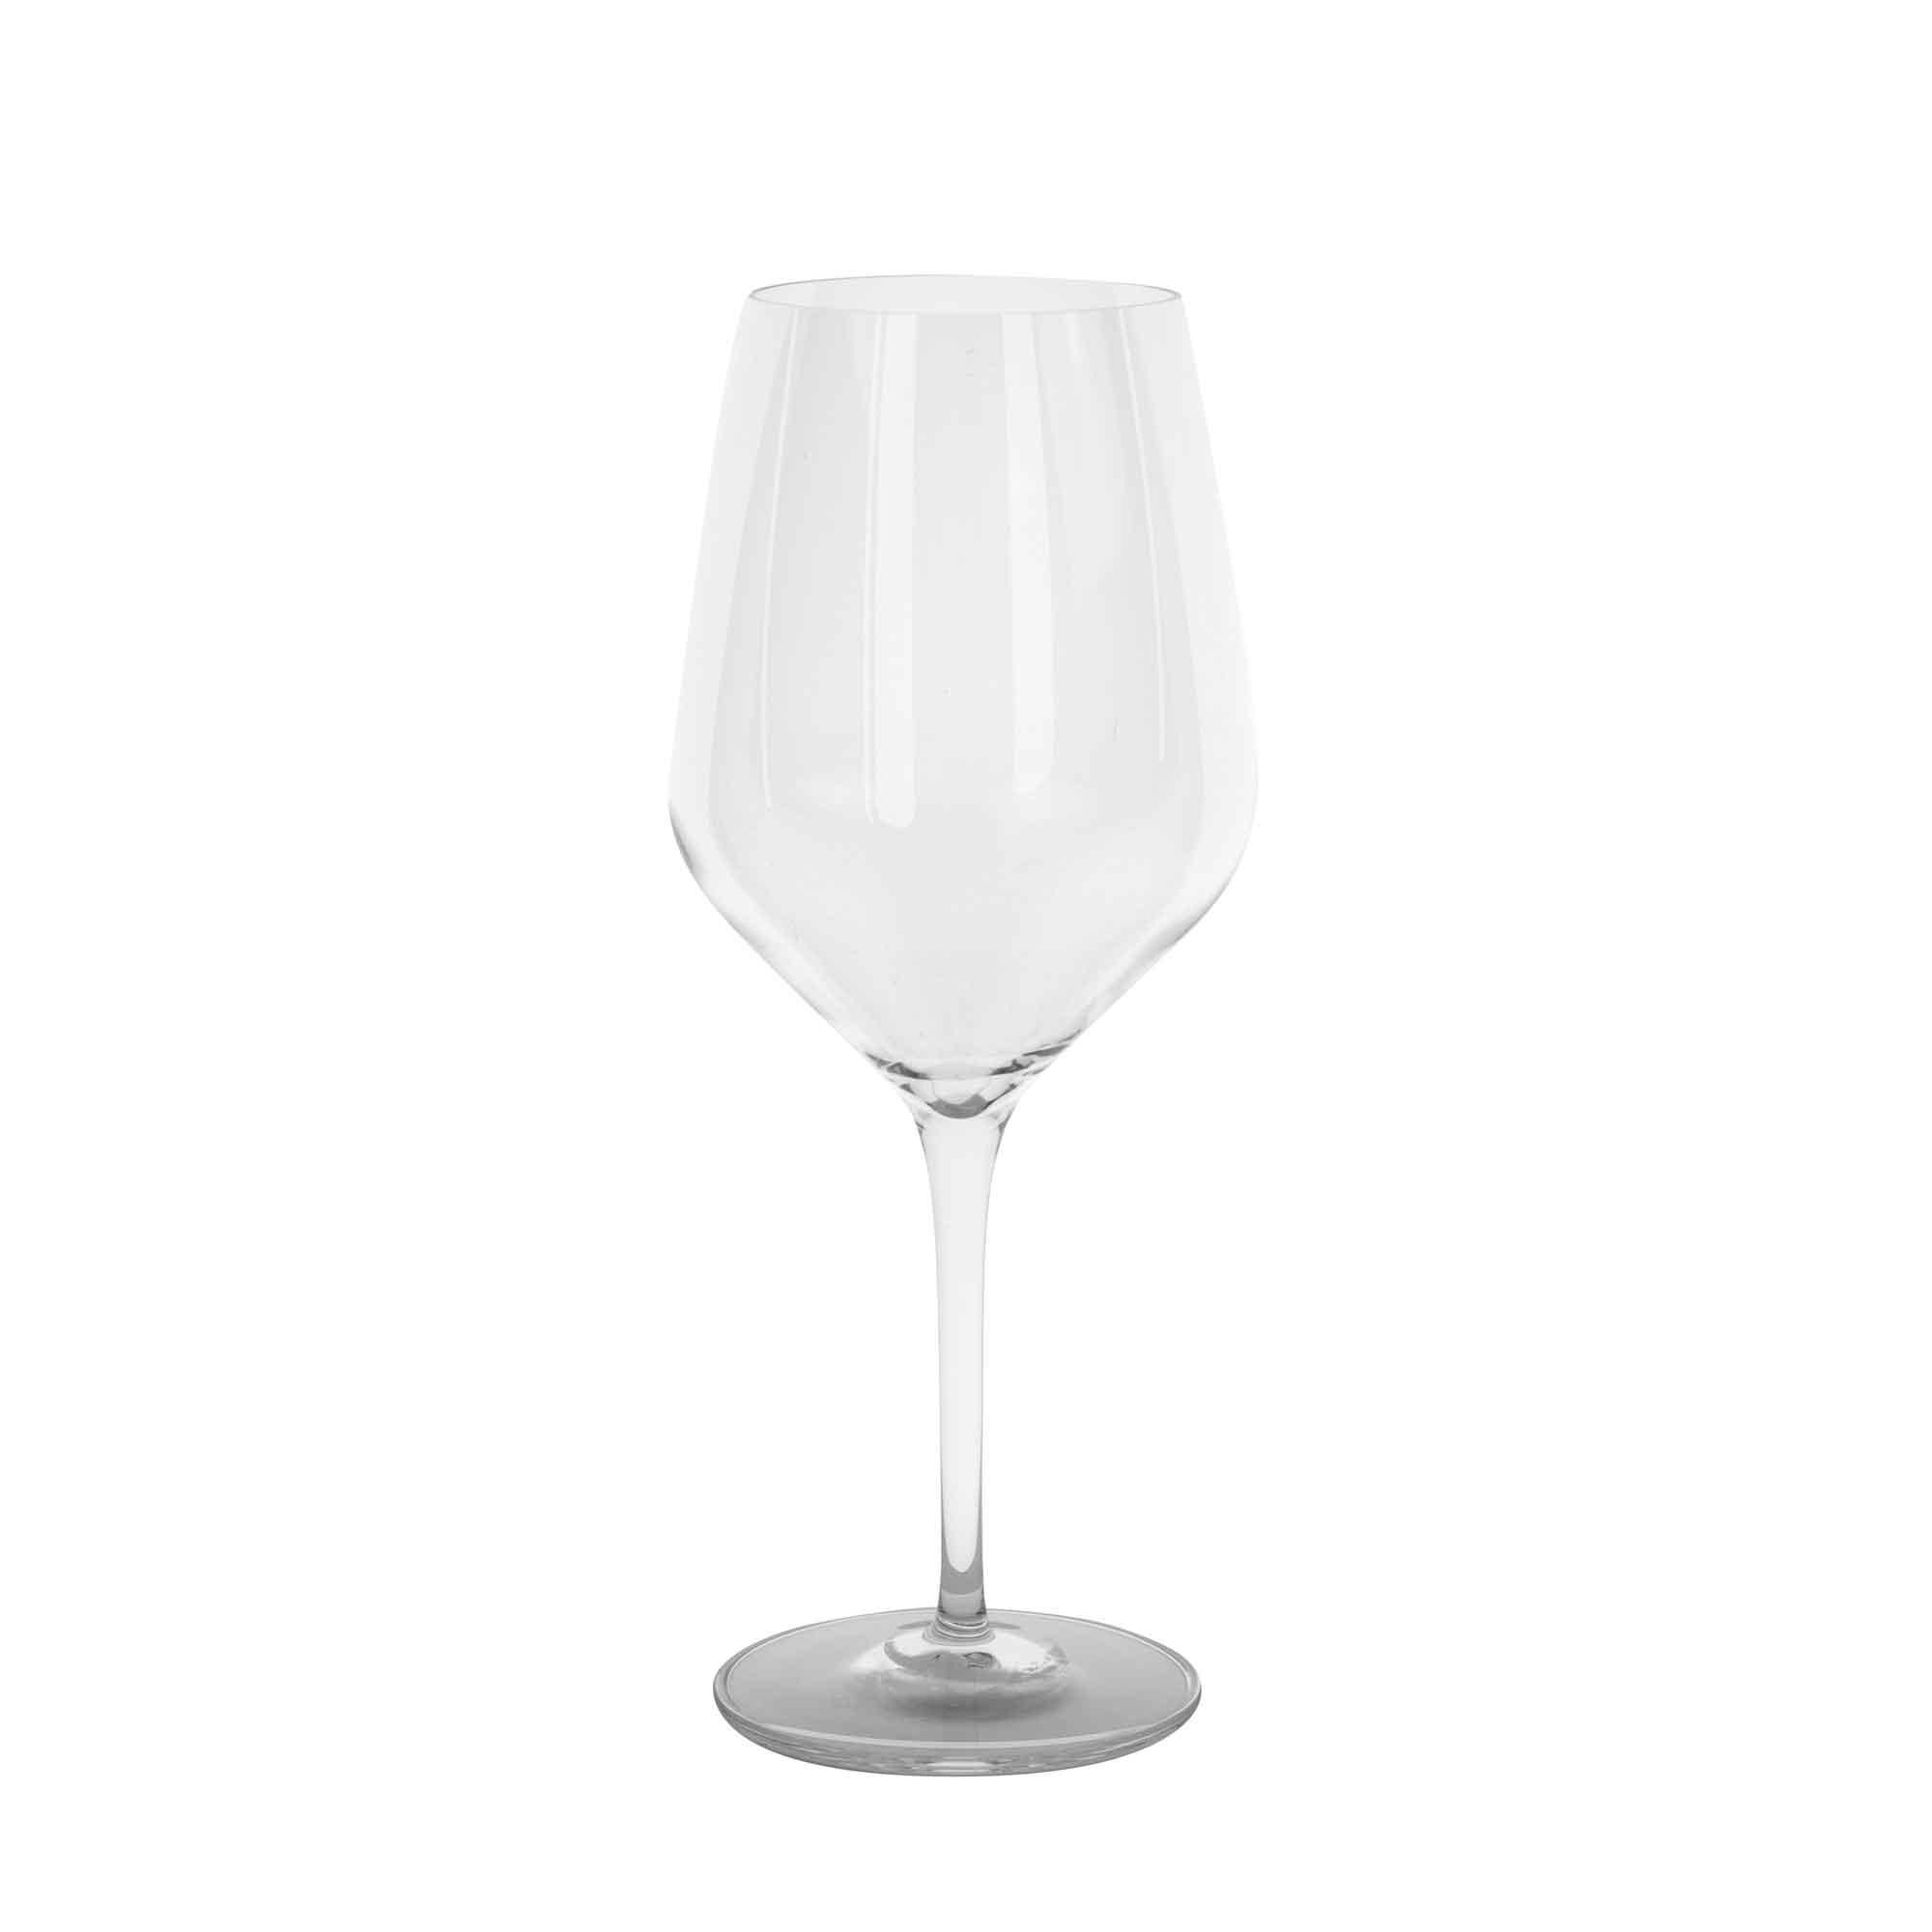 Chianti Glas, Luigi Bormioli, Atelier - Eichstrich: 0,2l